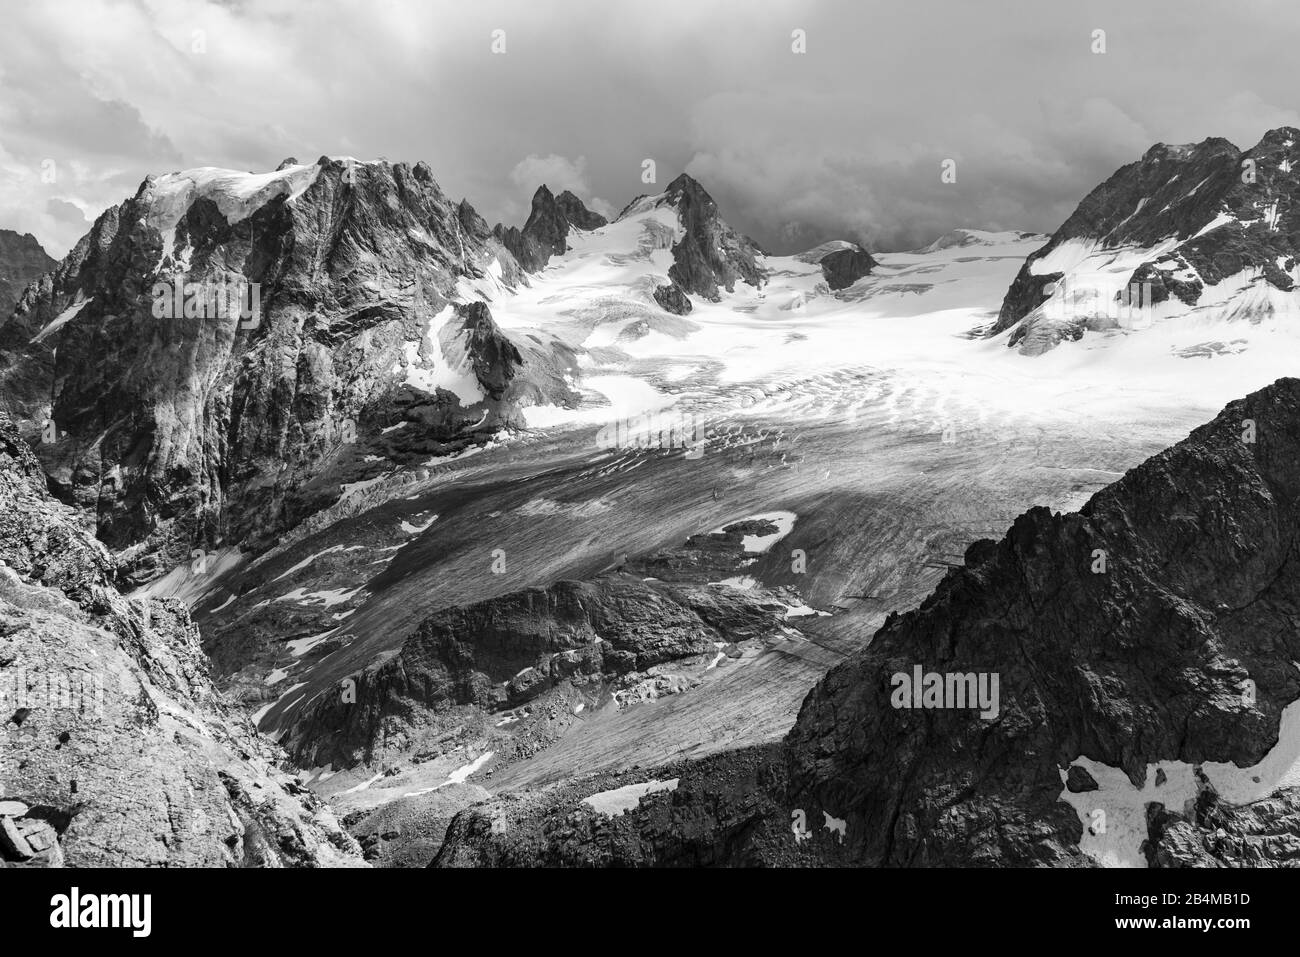 Schweiz, Wallis, Haute Route Chamonix Zermatt, Blick von der Berghütte Cabane des Vignettes auf Mont Collon und l'Eveque sowie Glacier du Mont Collon Foto Stock